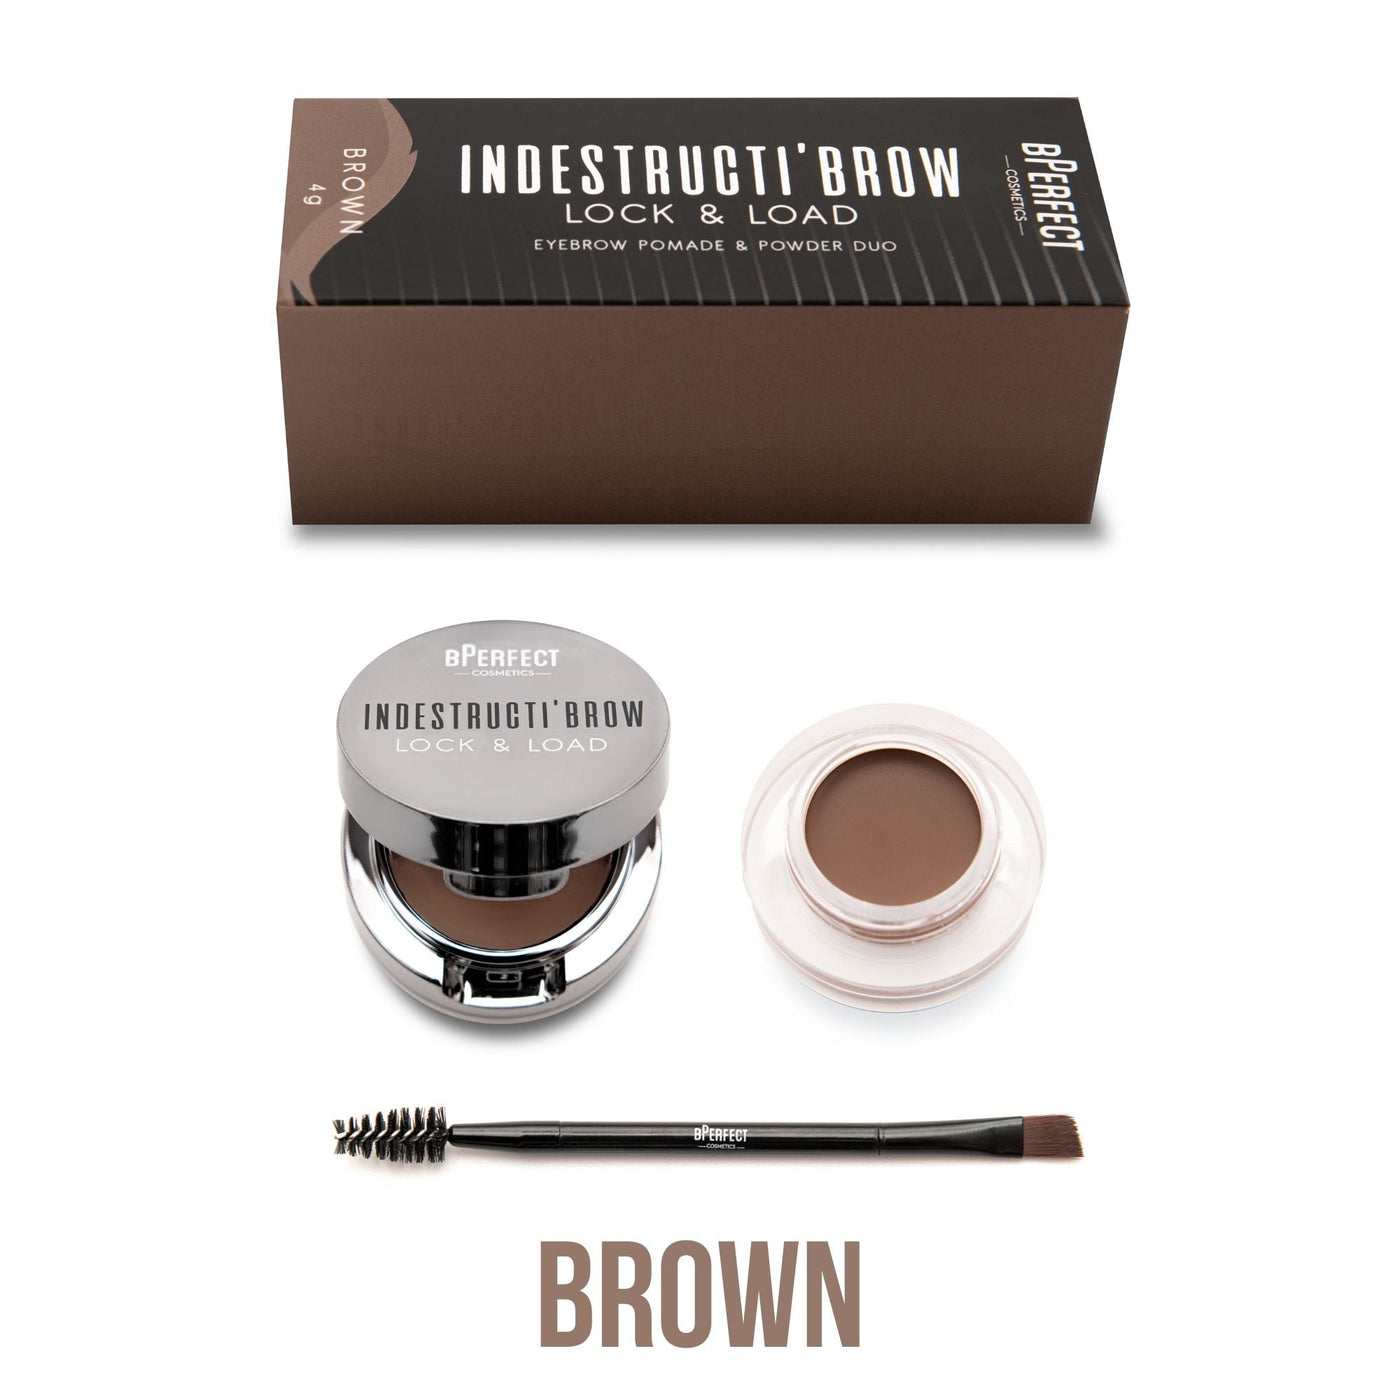 Indestructi'Brow Lock & Load Eyebrow Pomade & Powder Duo